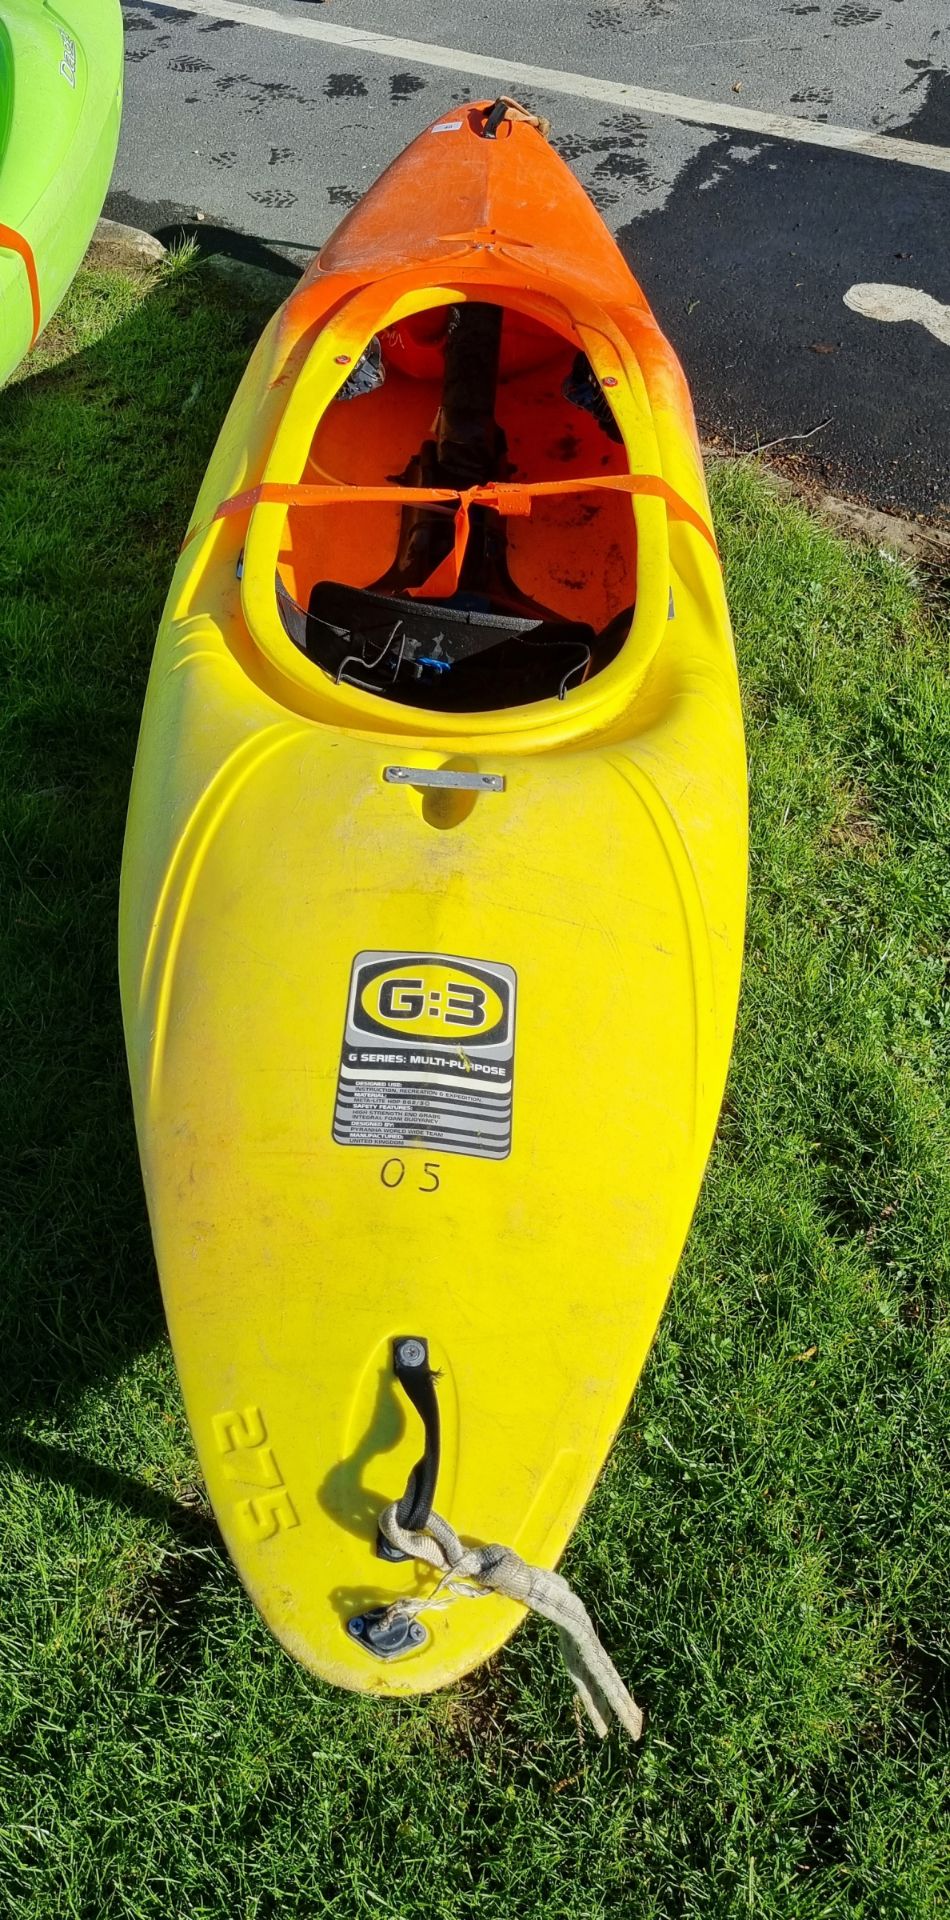 Pyranha G:3 G series kayak/canoe - L270 x W70 x H40cm - Orange yellow - Image 2 of 5